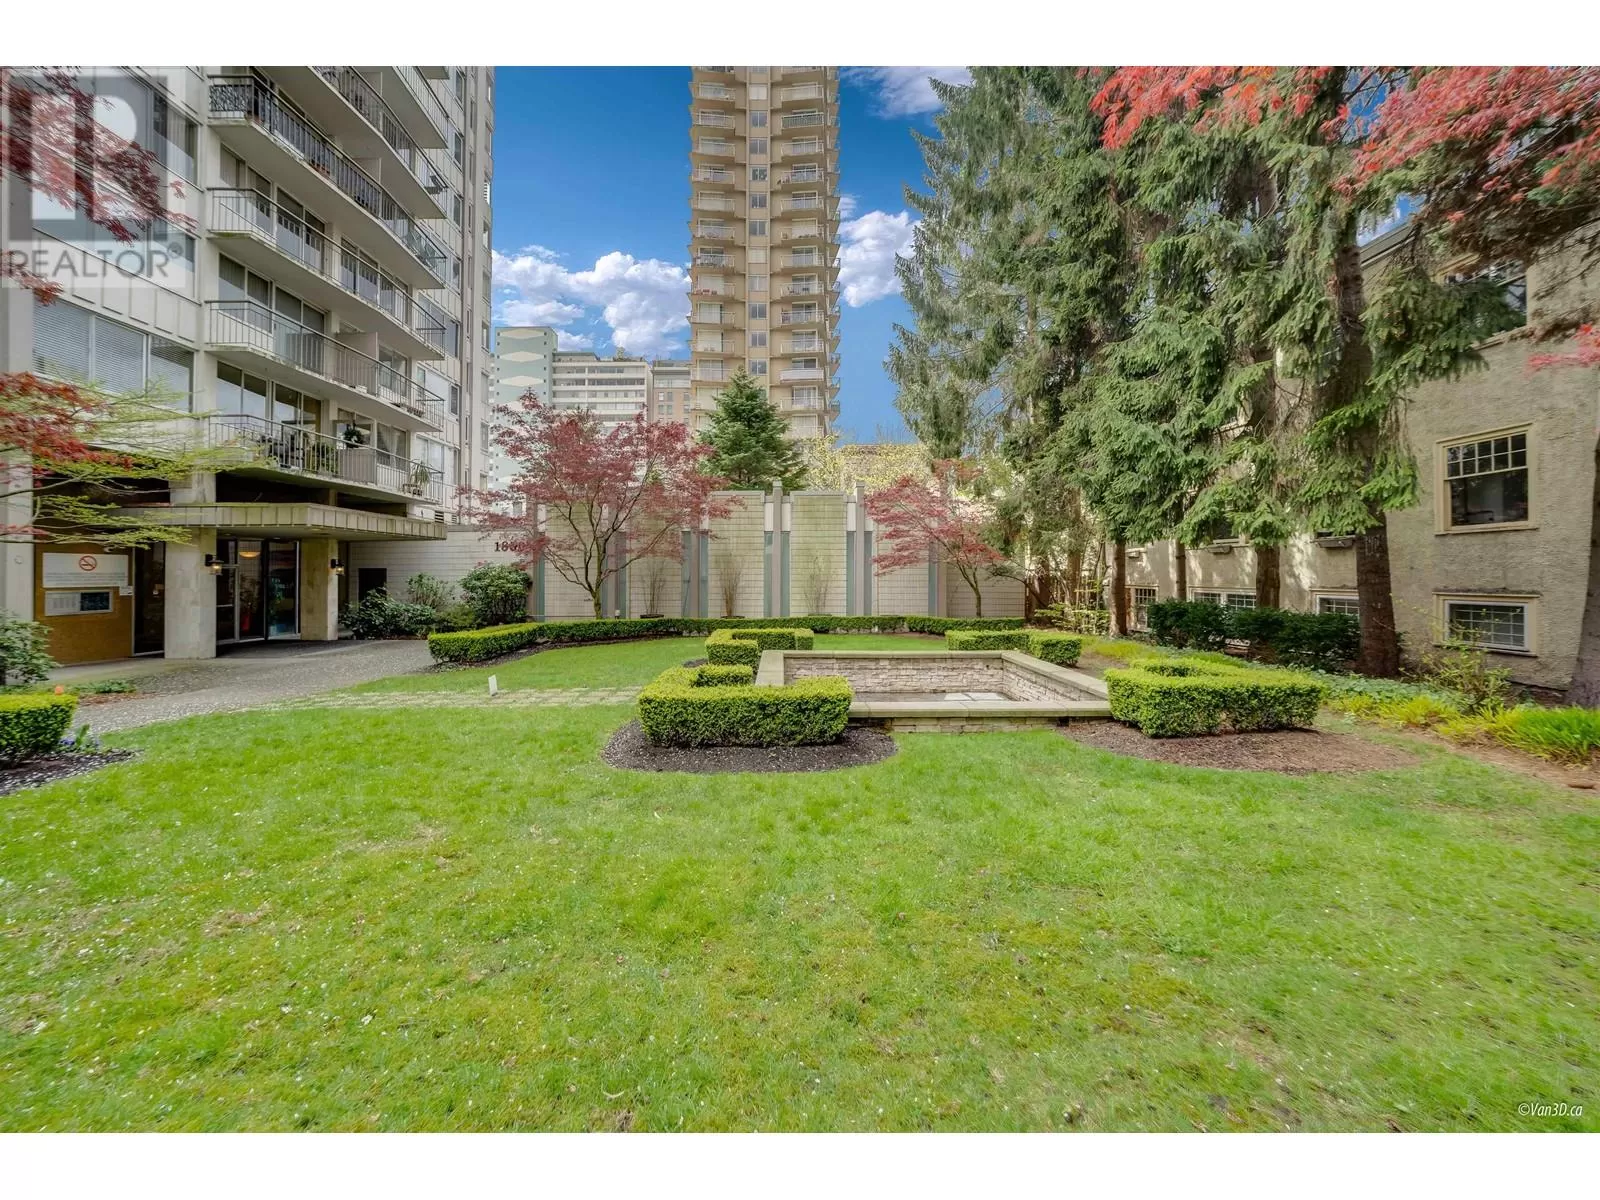 Apartment for rent: 2607 1850 Comox Street, Vancouver, British Columbia V6G 1R3